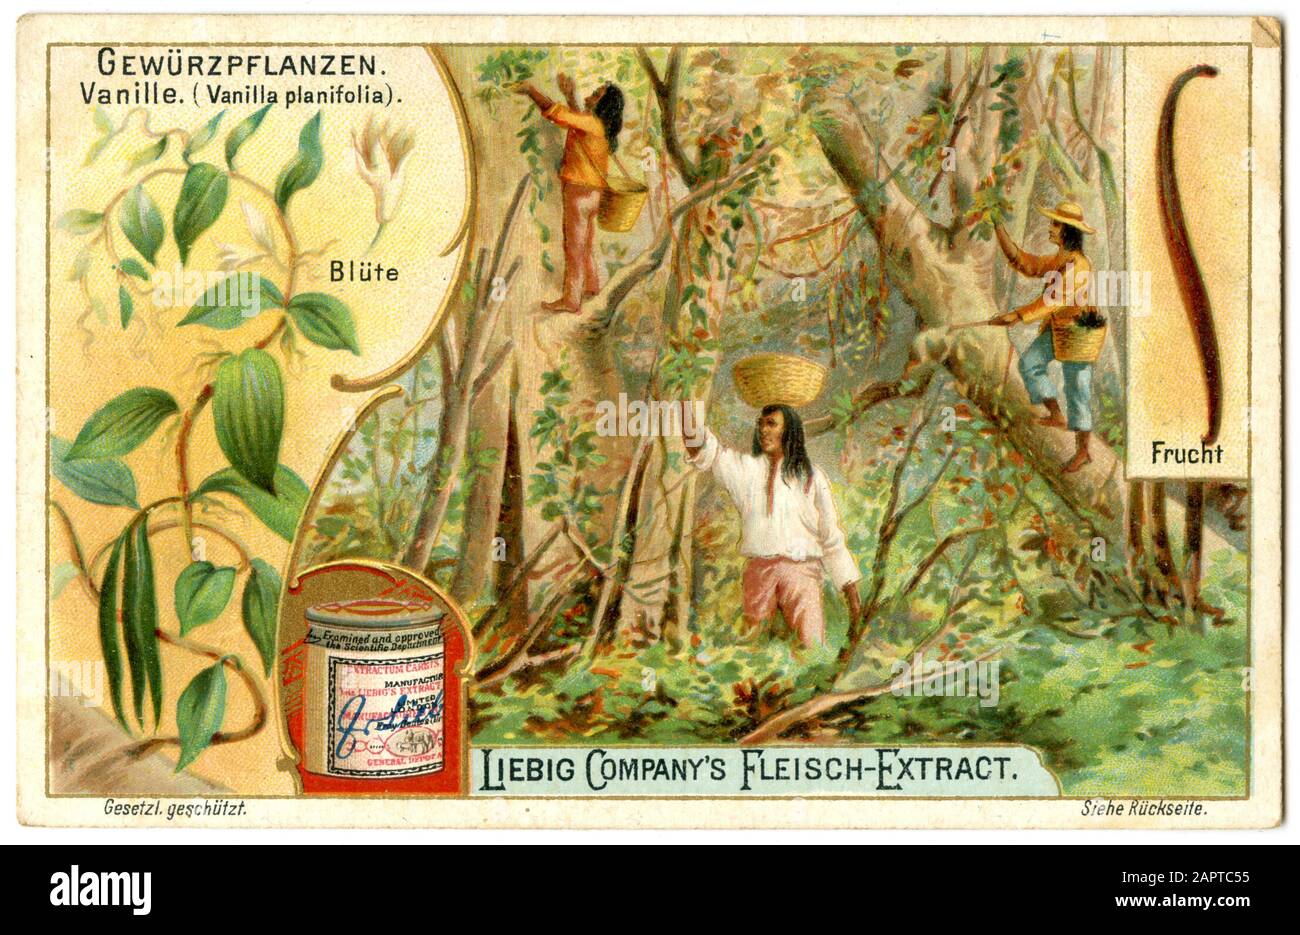 Vanilla  plant, fruit and harvest on a Liebig image Vanilla planifolia,  (, ) Stock Photo